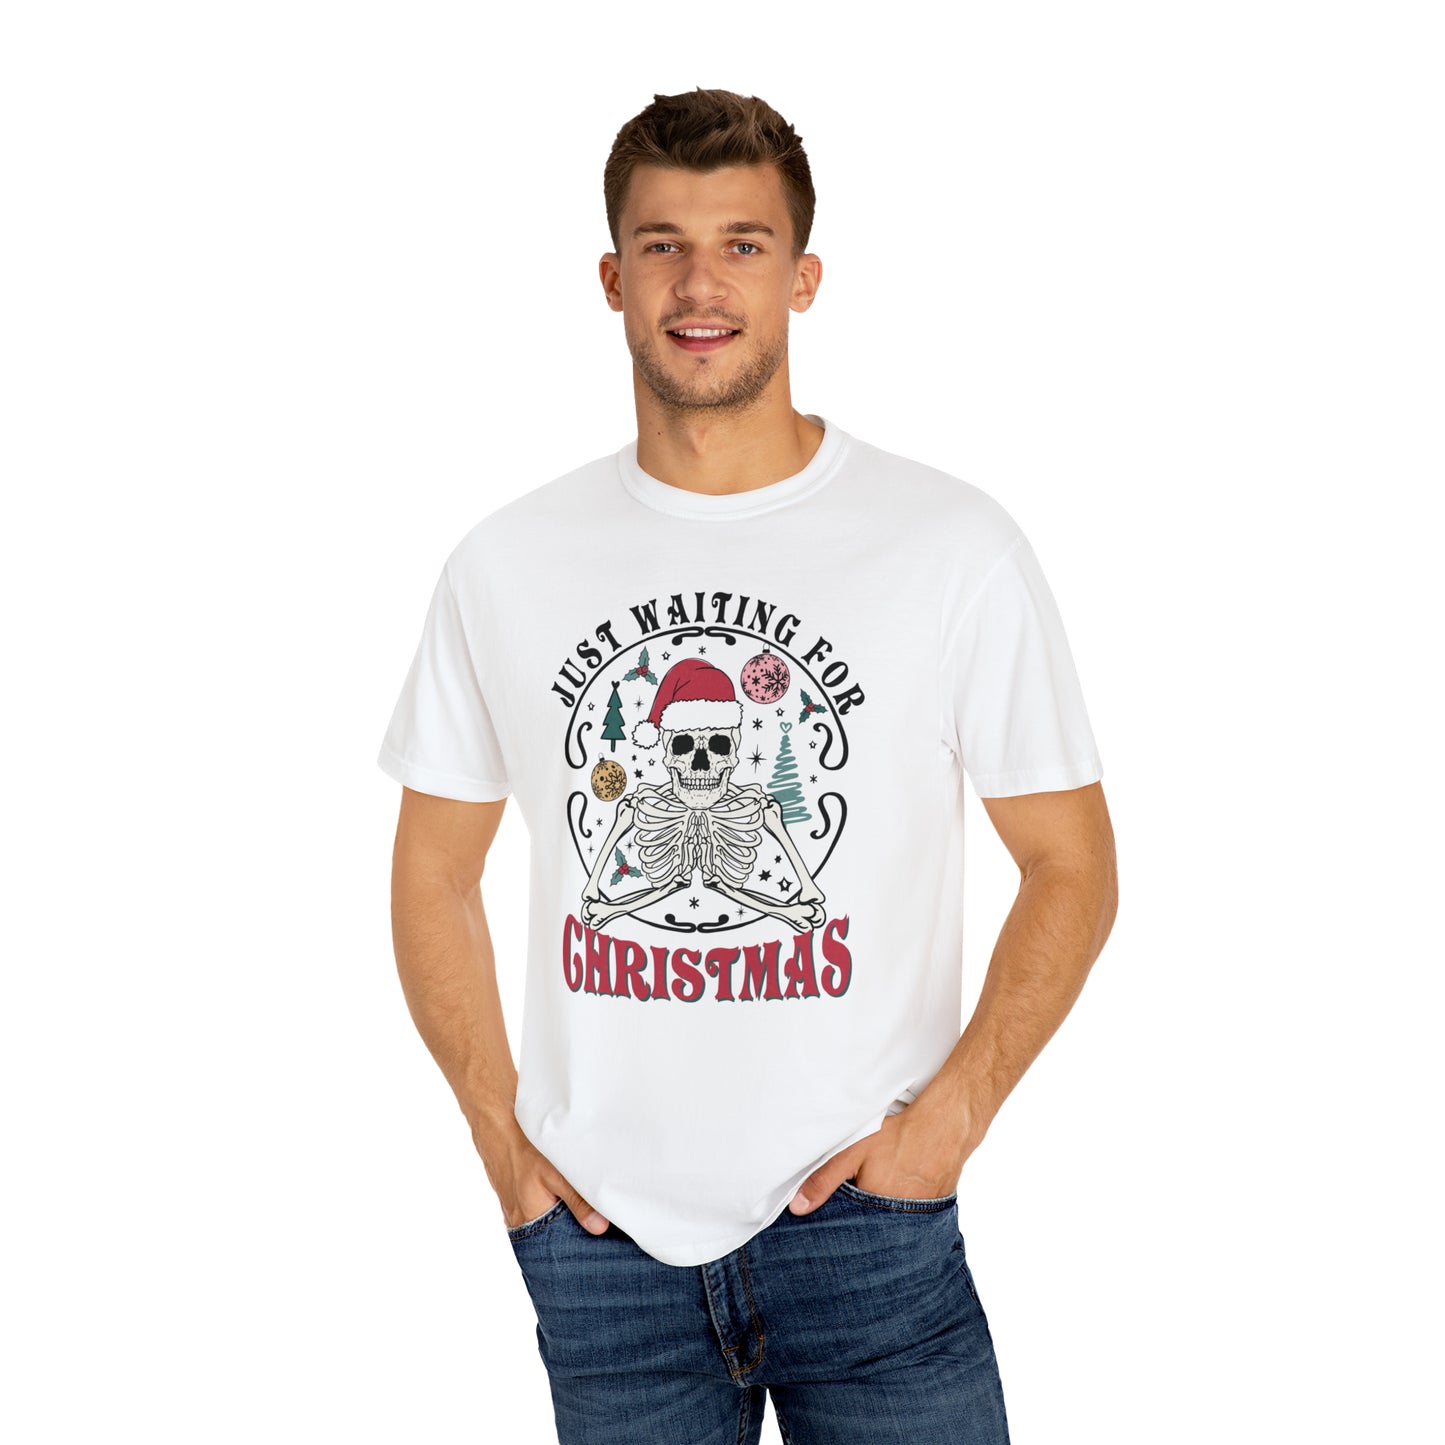 Waiting For Christmas Santa Skeleton on Comfort Color TShirt, Women Cute Oversized Xmas Shirt, Men Holiday Tee Gift, Funny Christmas top